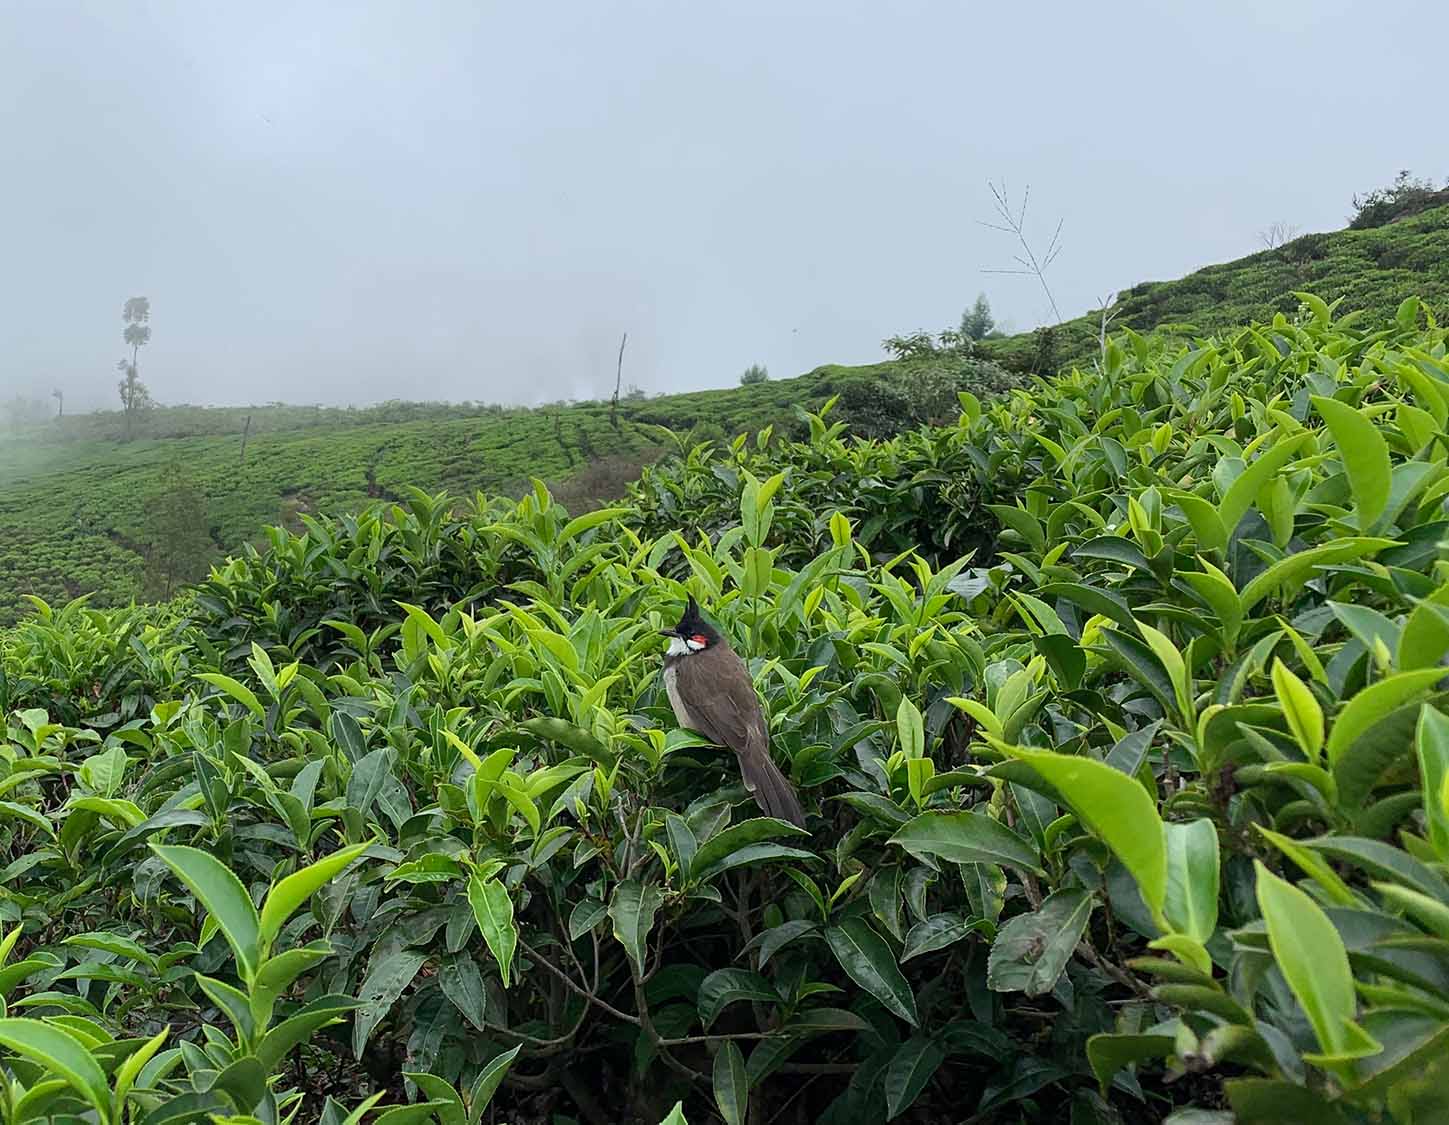 A bird sitting in a tea field